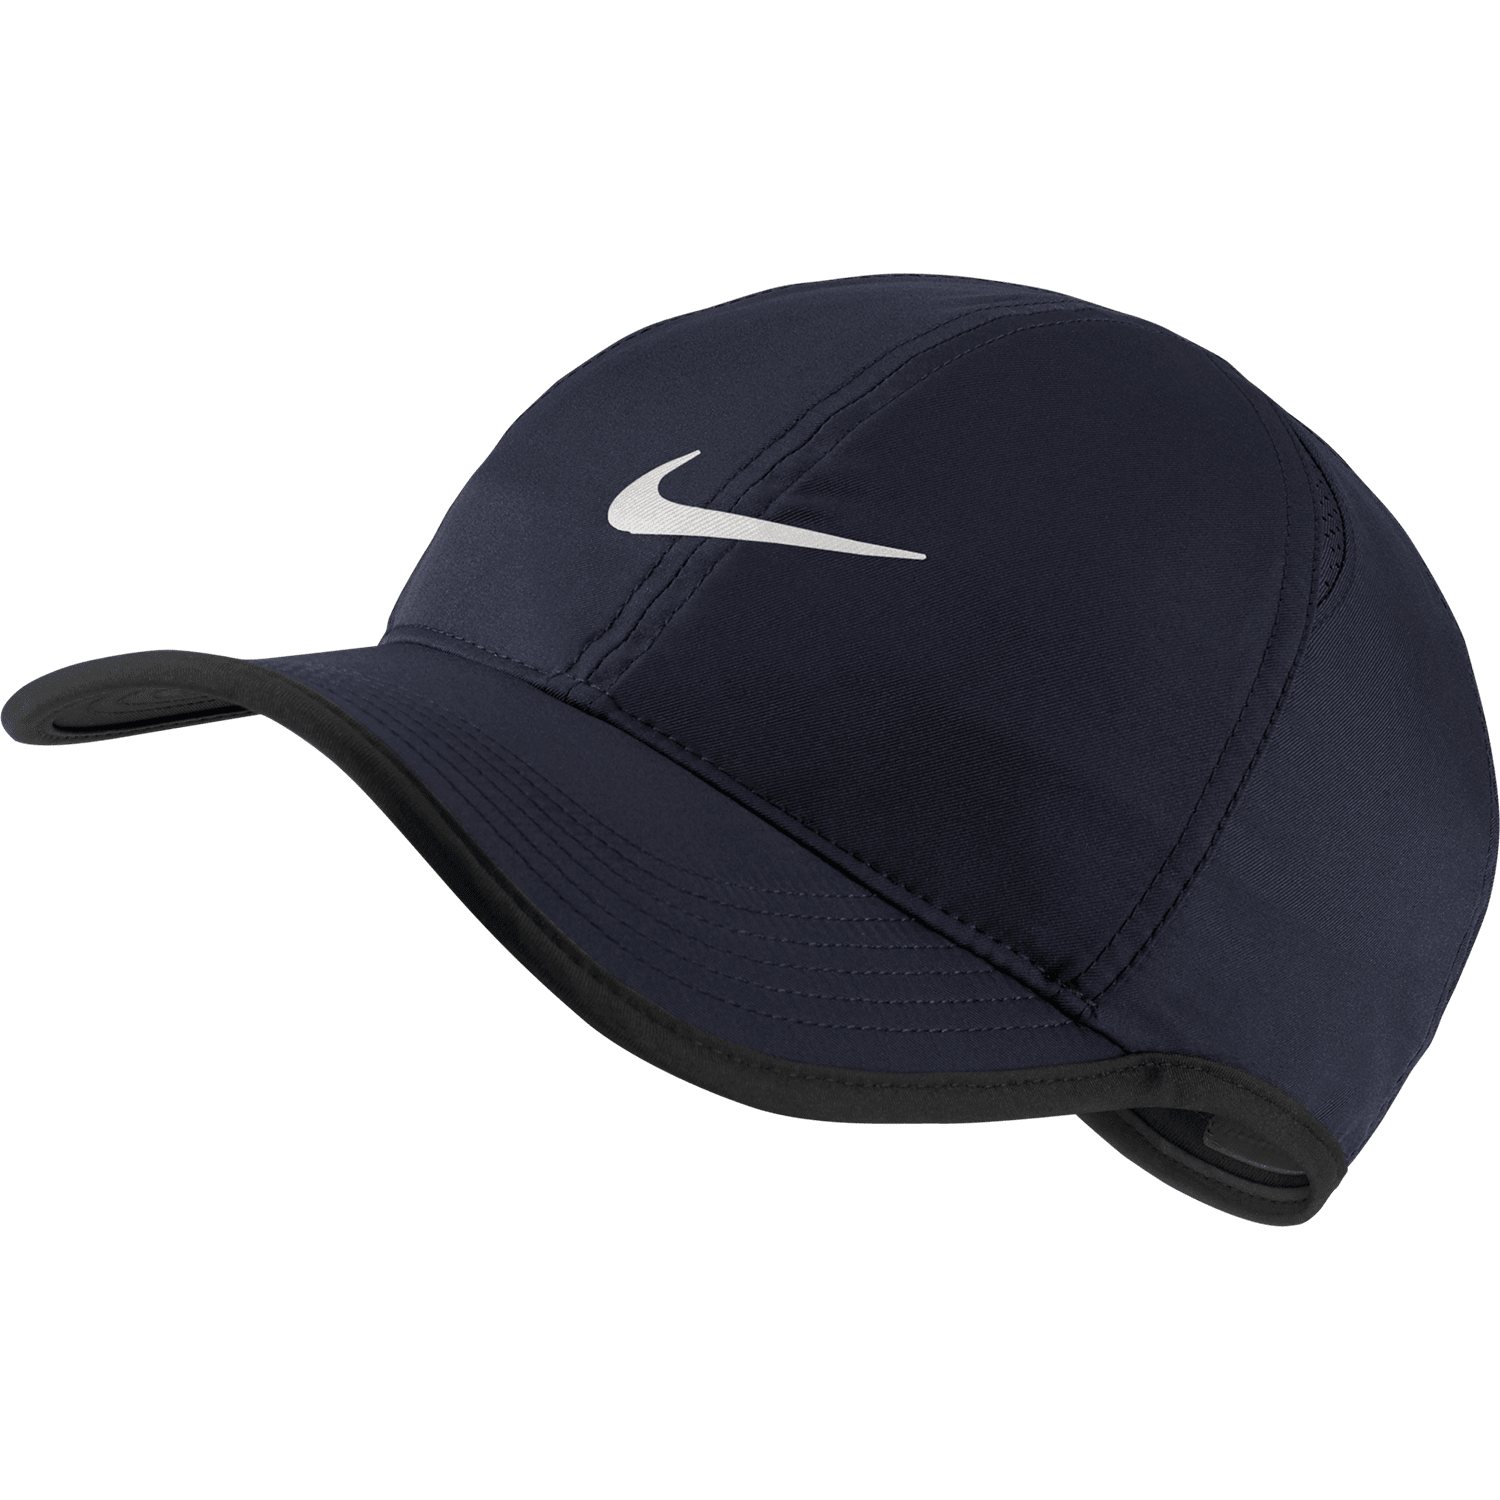 nike court aerobill featherlight tennis cap